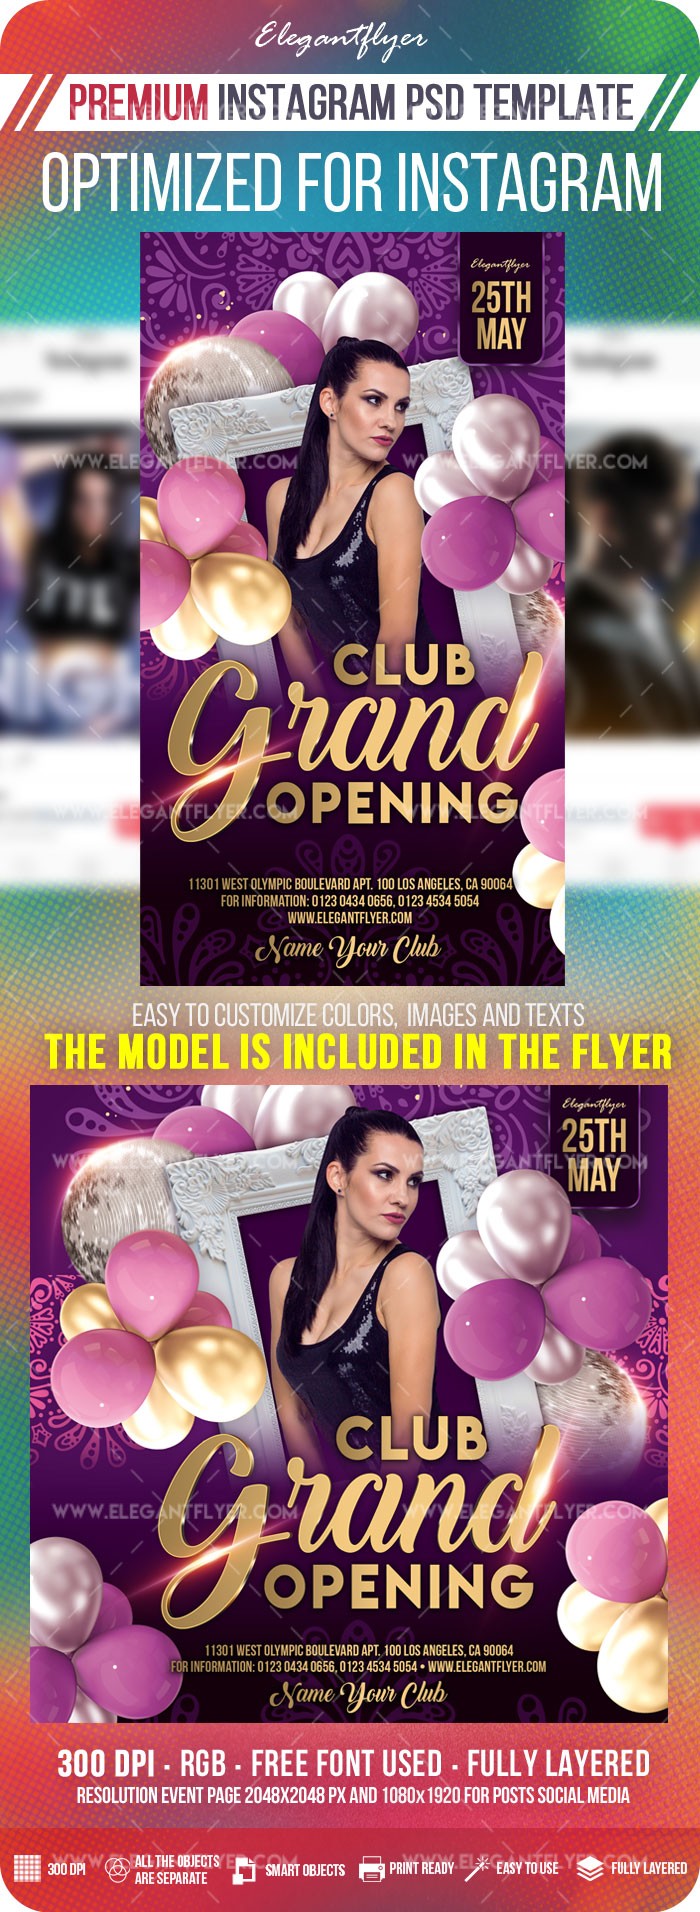 Otwarcie klubu Grand Opening na Instagramie. by ElegantFlyer